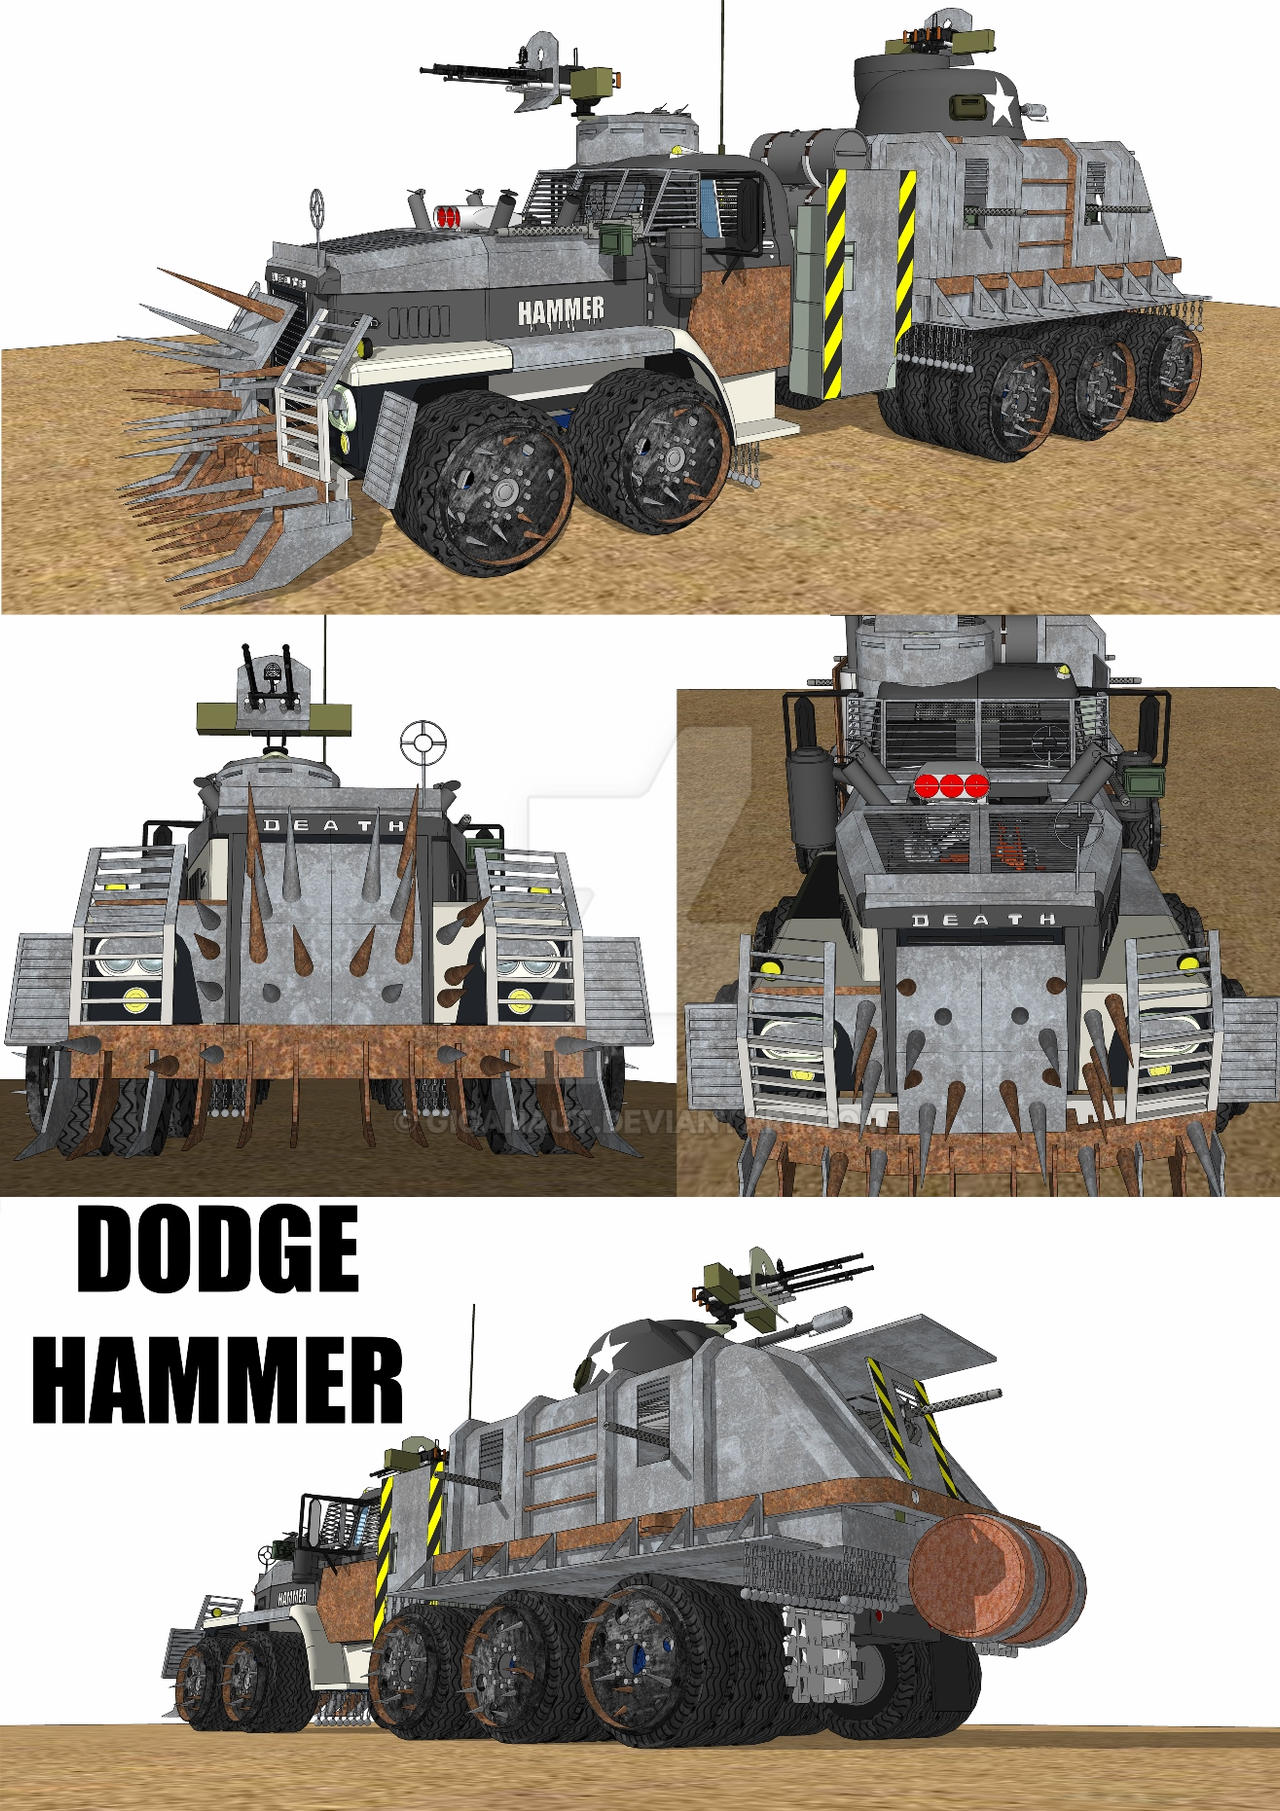 Dodge Hammer